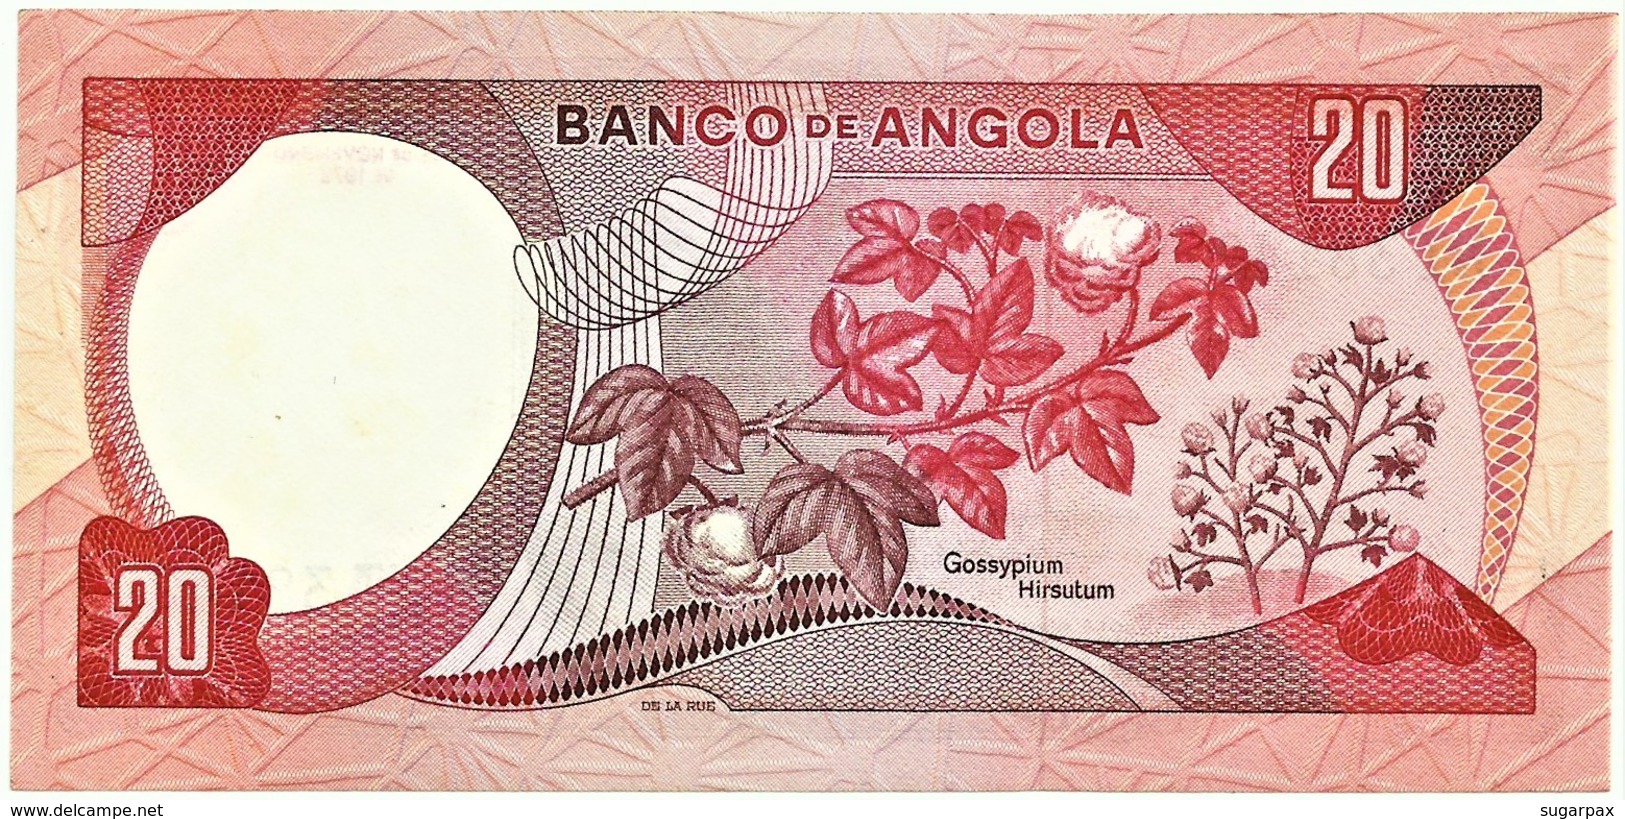 Angola - 20 Escudos - 24.11.1972 - Pick 99 - Unc. - Série NI - Marechal Carmona - PORTUGAL - Angola